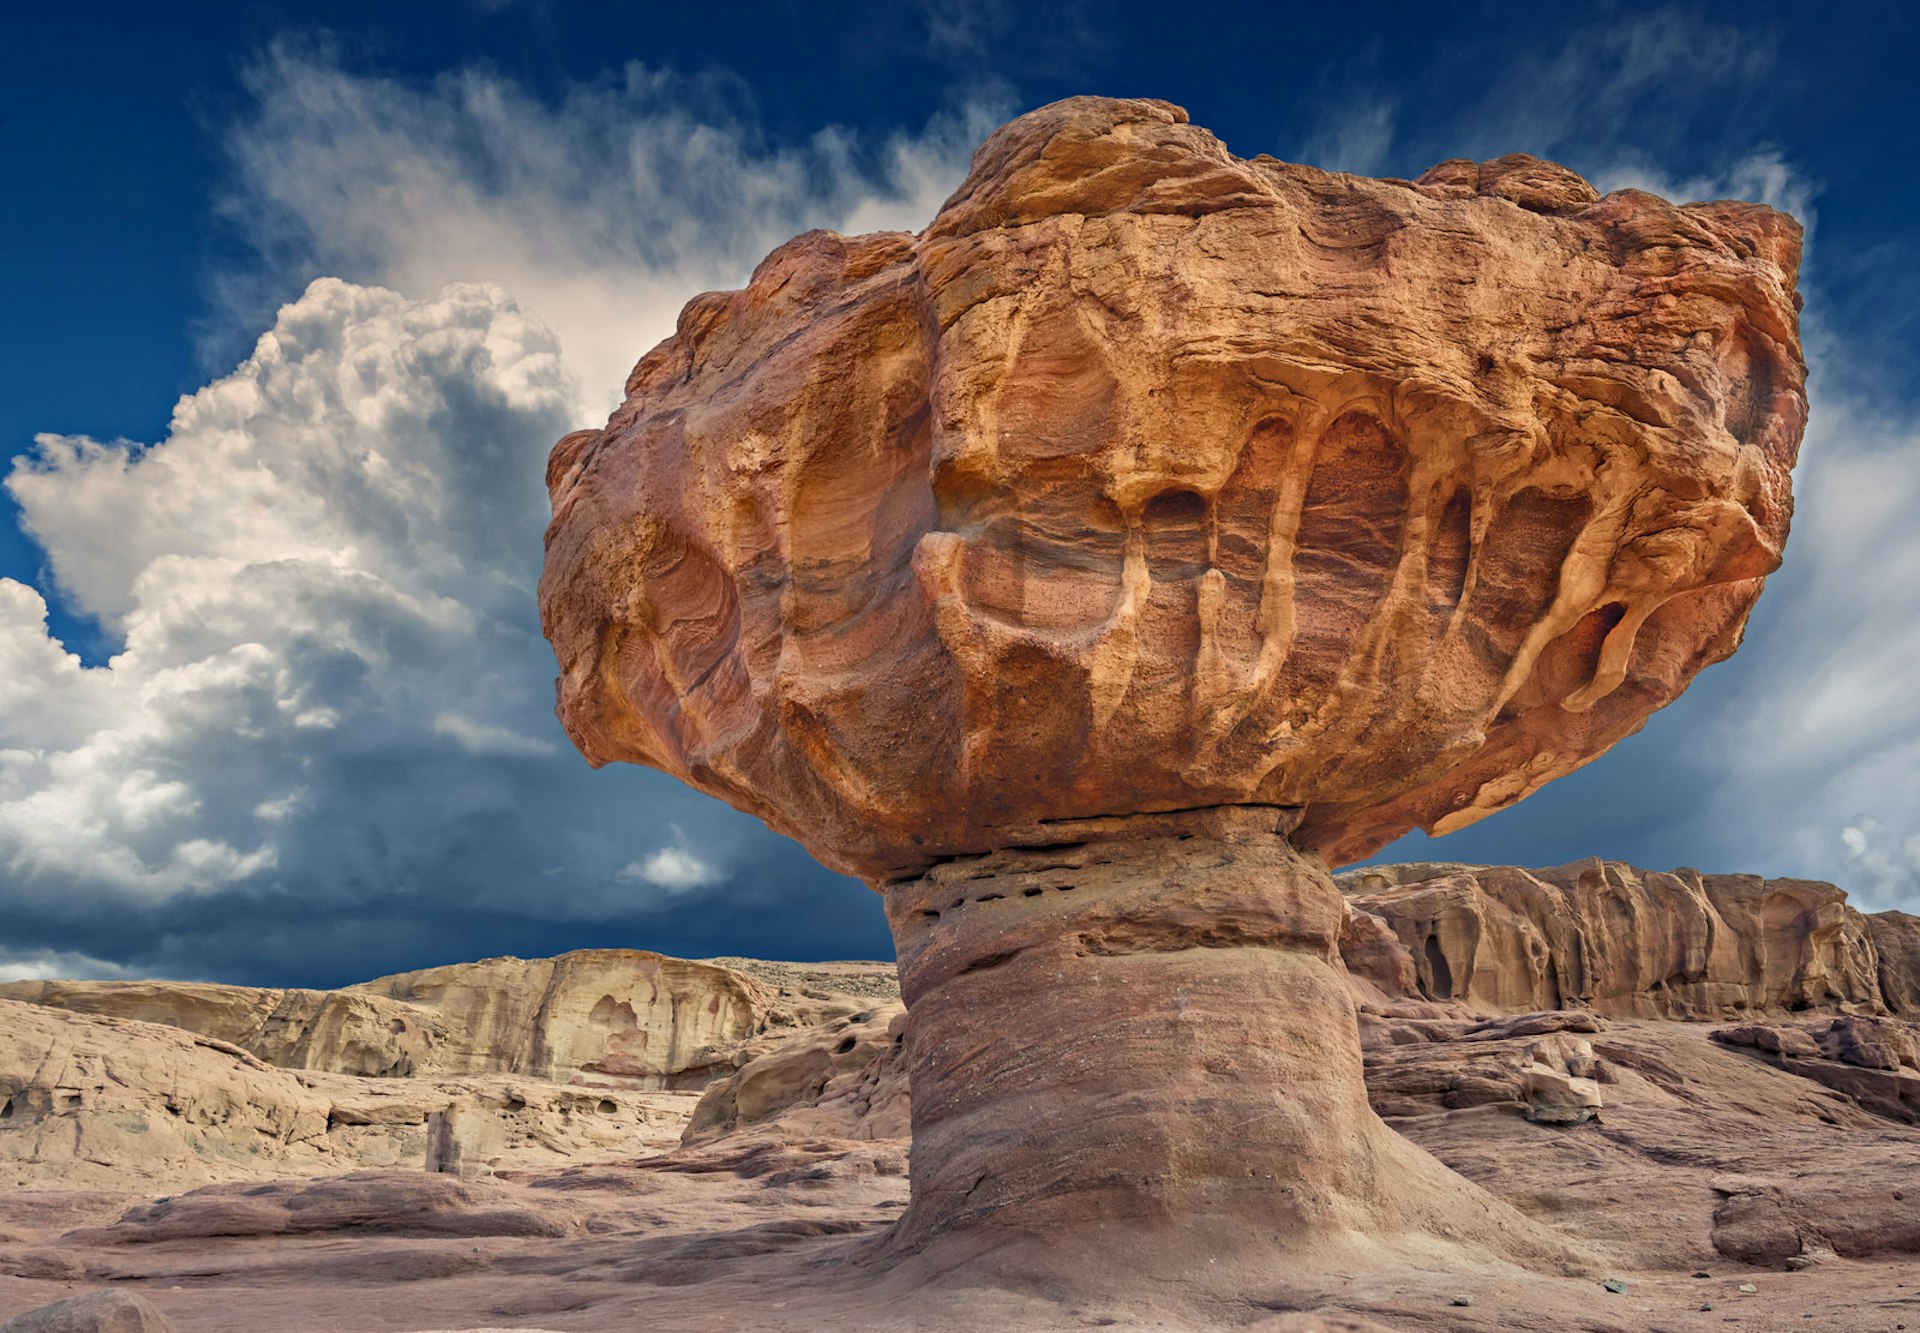 Mushroom rock formation in Timna Park near Eilat, Israel. Image by Sergei25 / Shutterstock